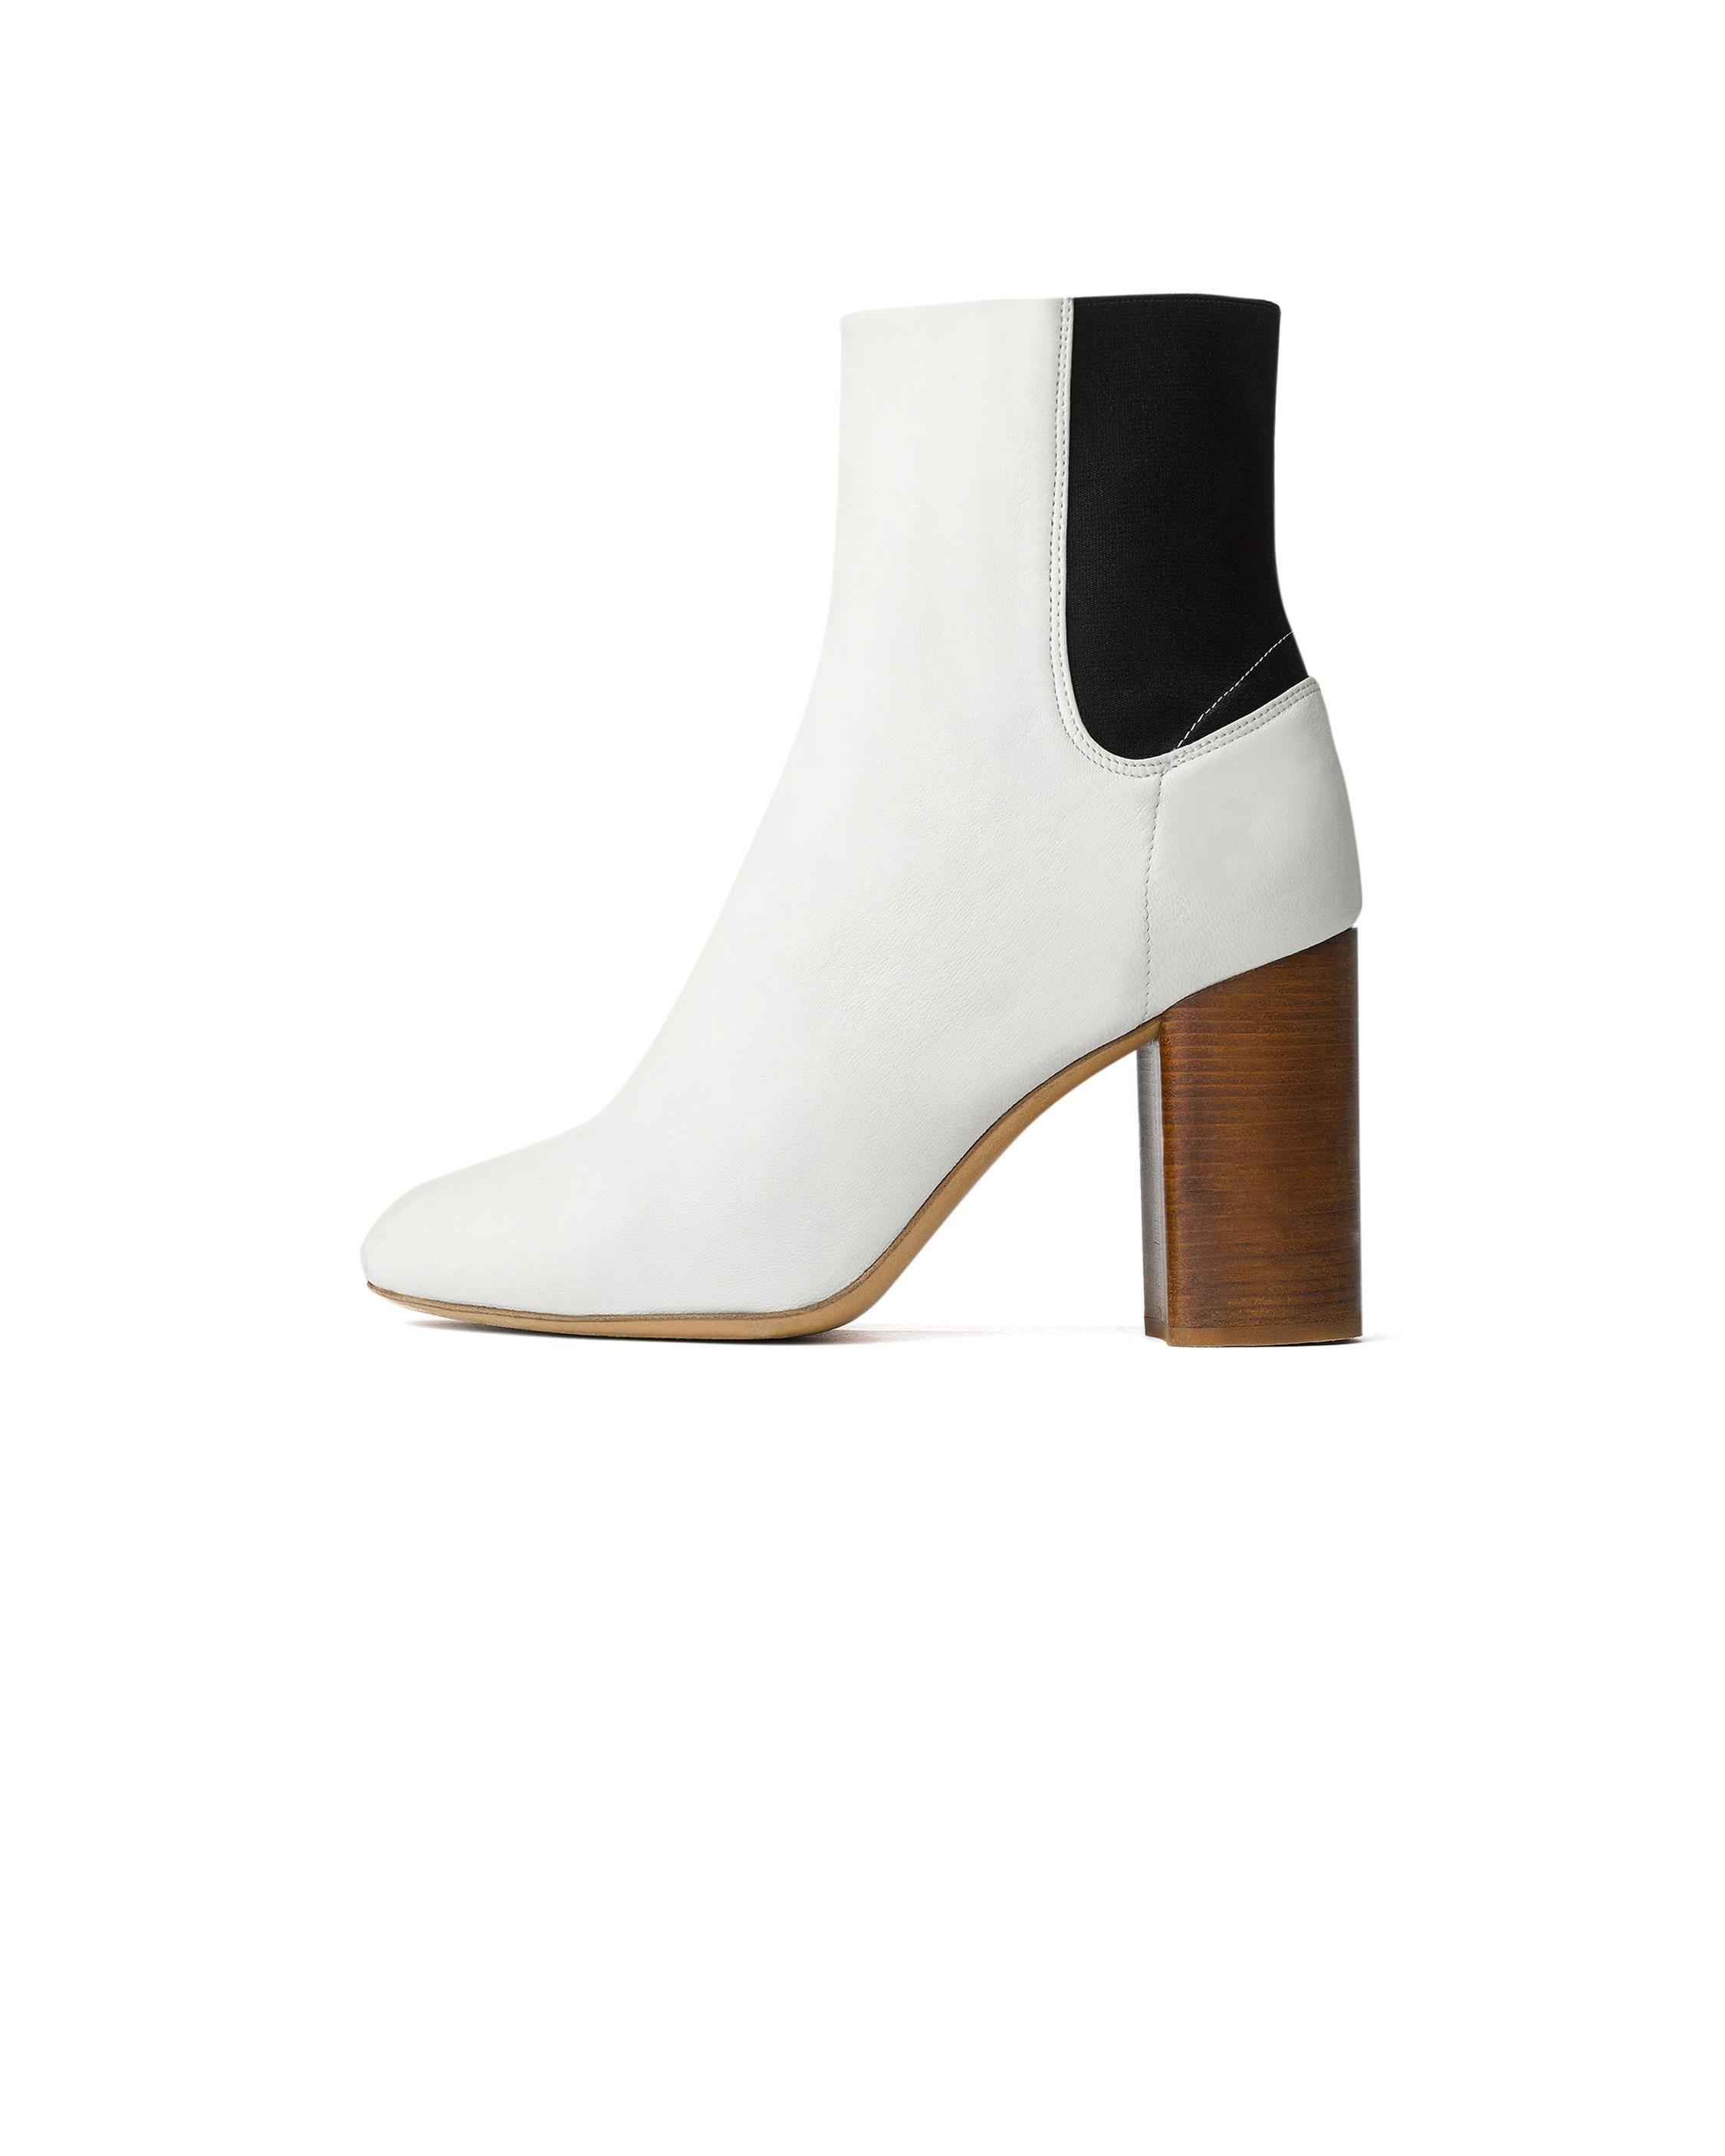 Rag & bone Agnes Boot in White | Lyst